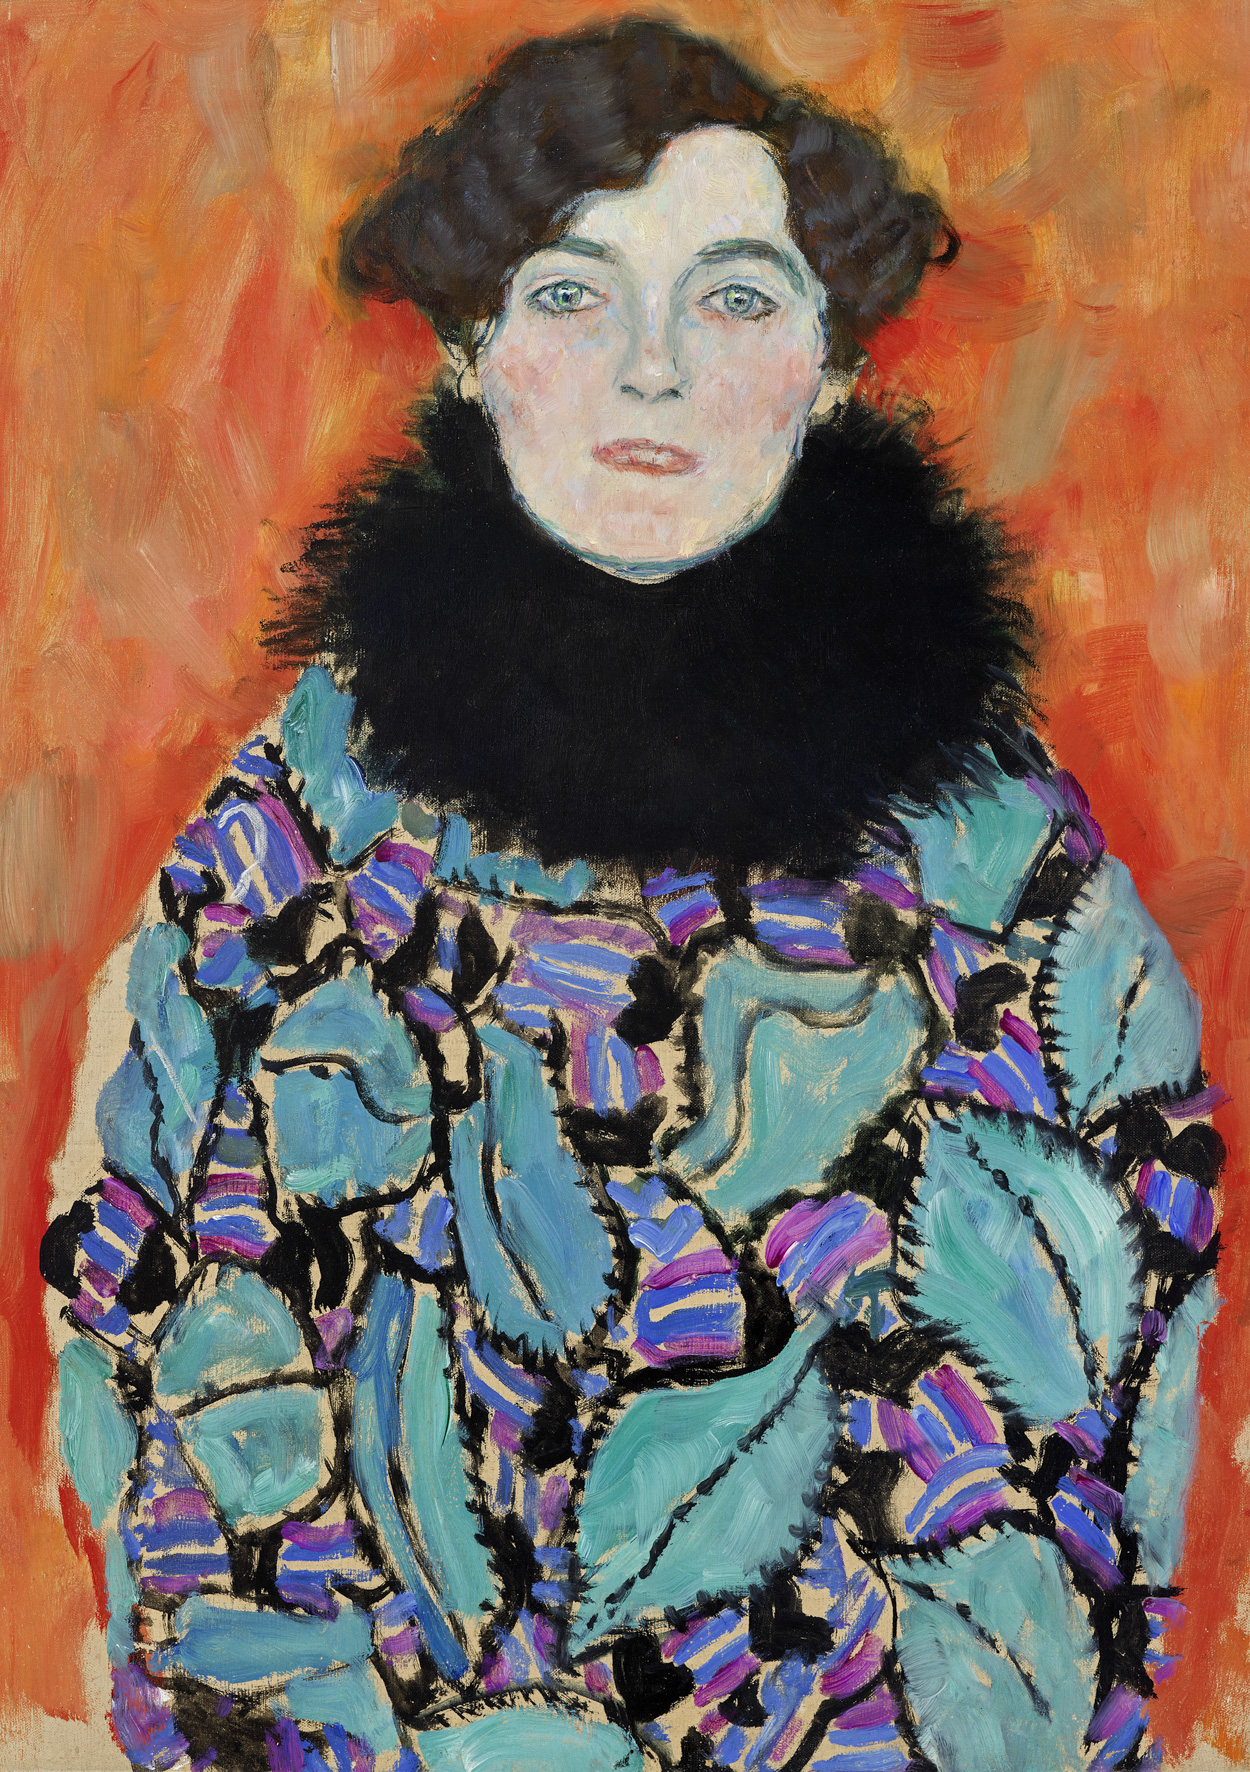 Painting by Gustav Klimt, Johanna Staude (1917/1918)